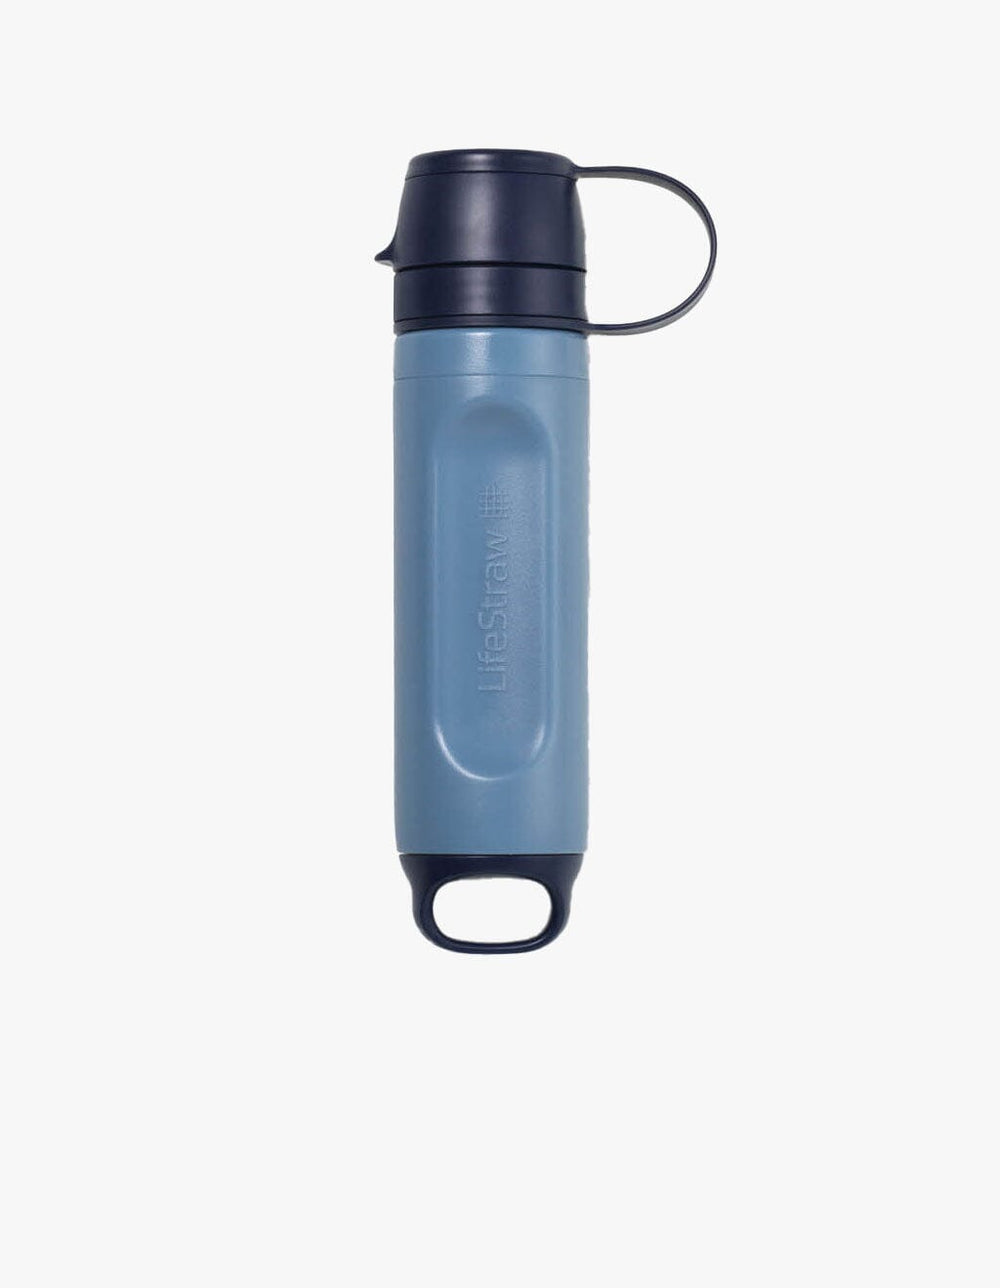 Custom 19 oz. Plastic Sports Water Bottles with Straw